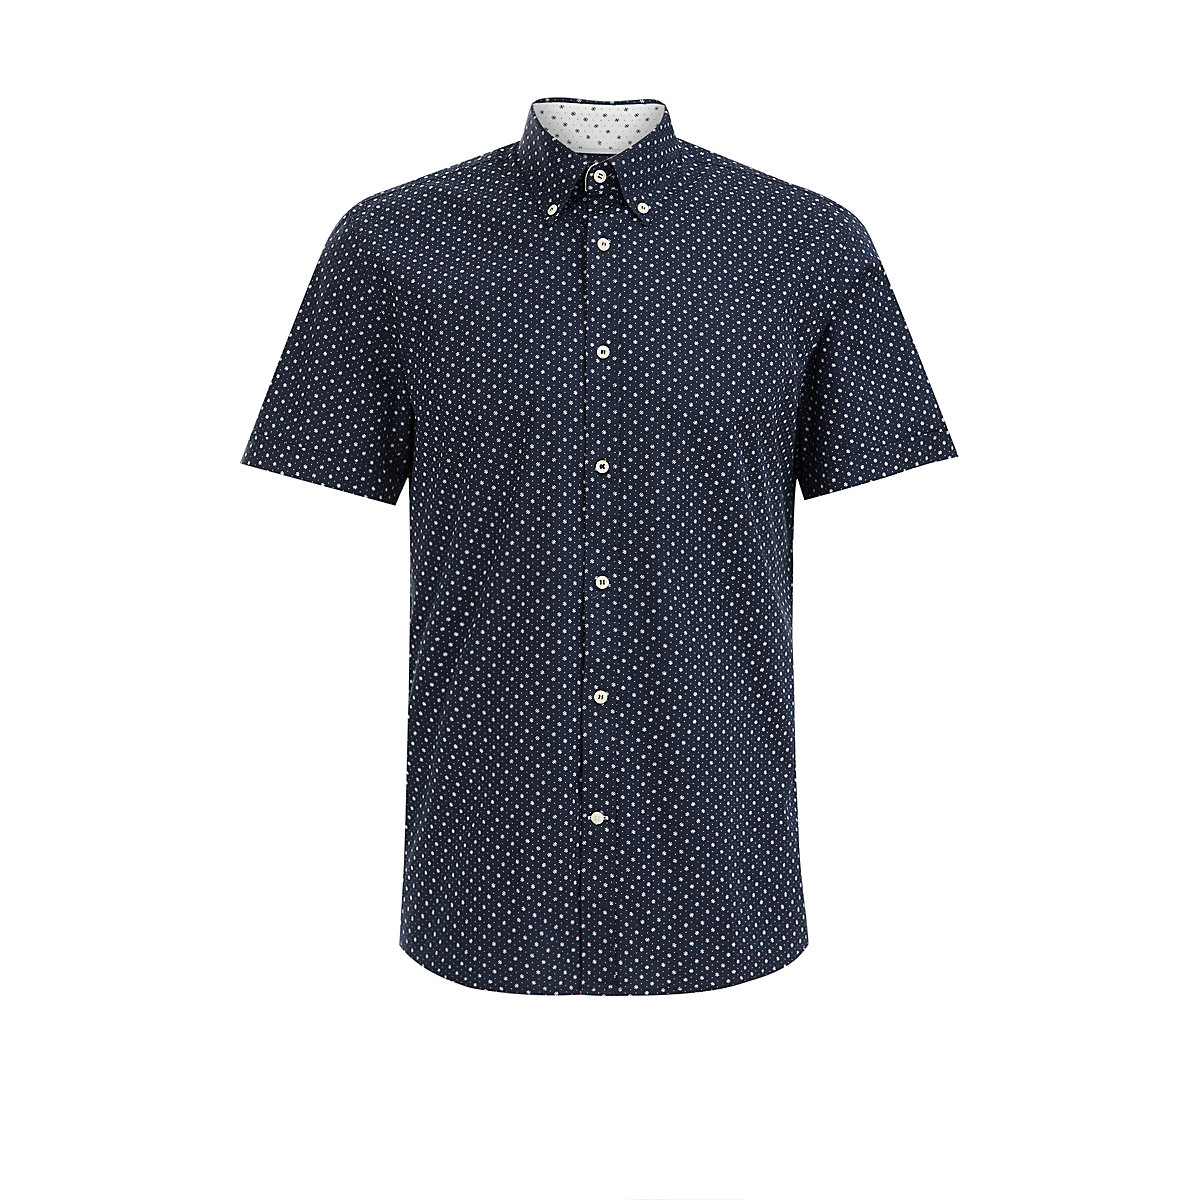 WE Fashion Herren-Slim-Fit-Hemd mit Muster Langarmhemden blau